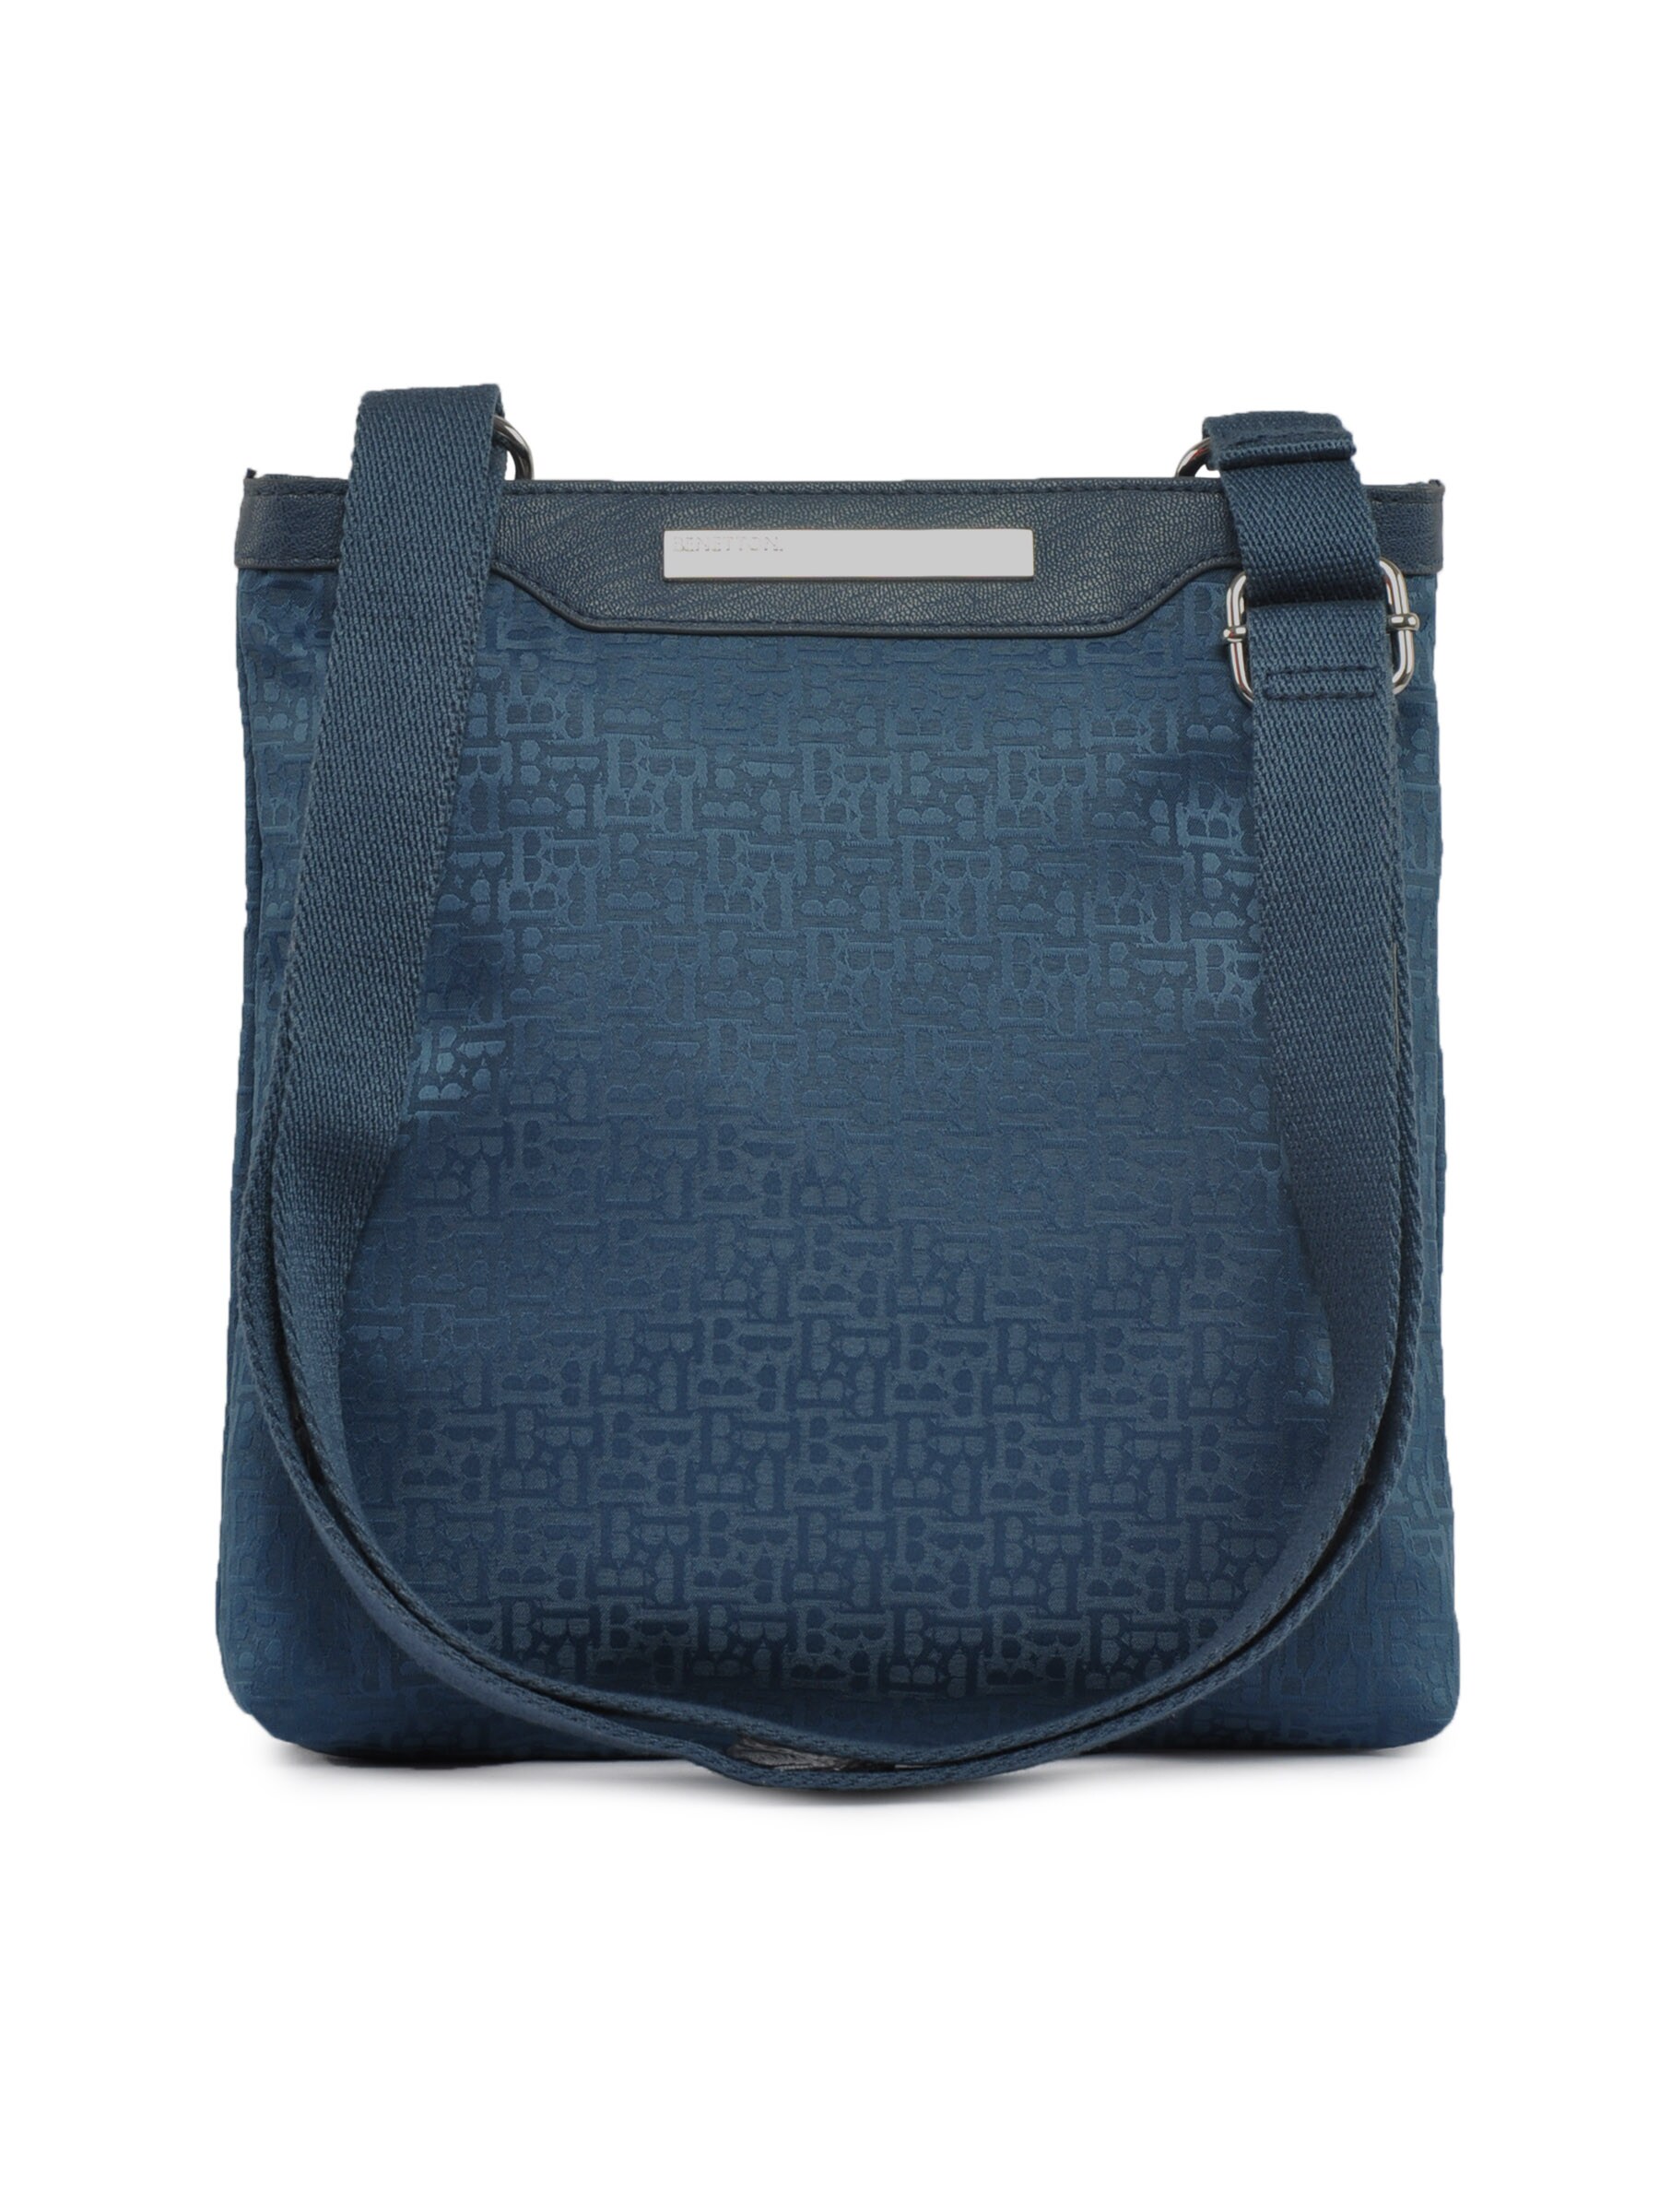 United Colors of Benetton Women Blue Handbag